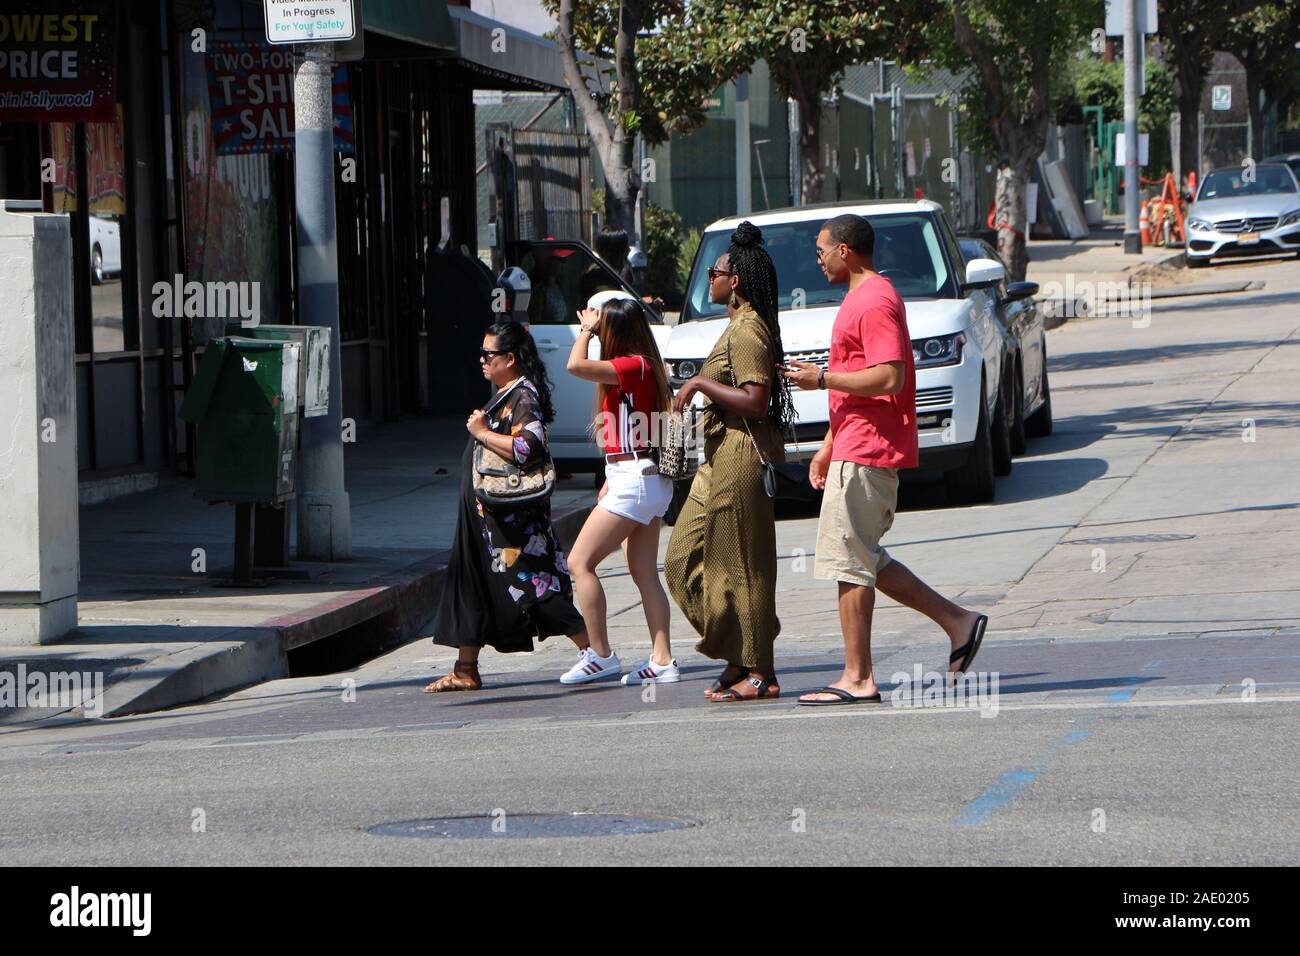 Pedestrians on Hollywood street, Los Angeles, California Stock Photo